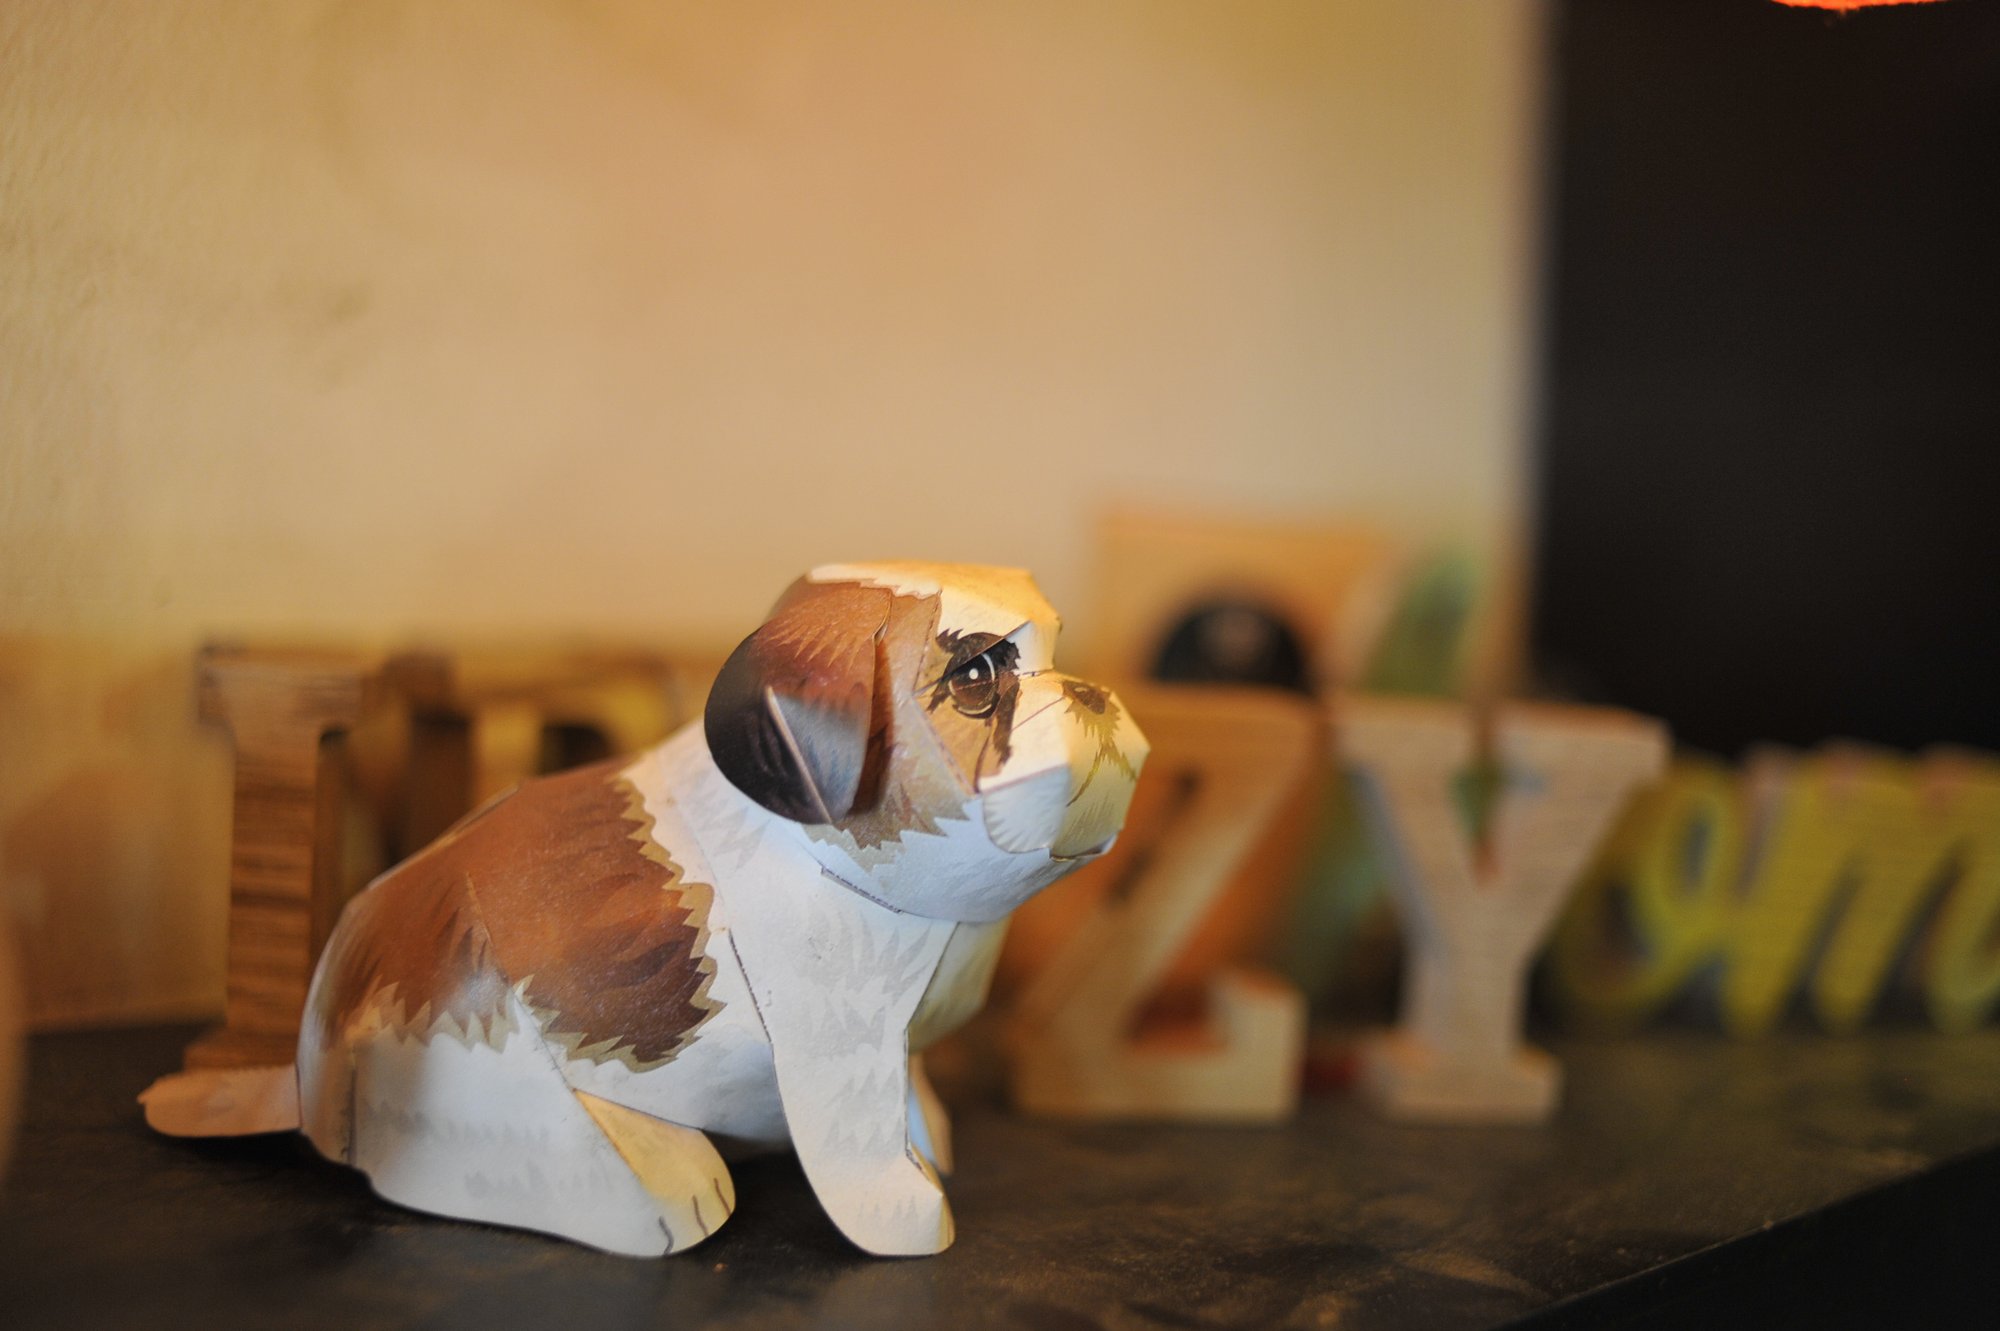 A paper dog